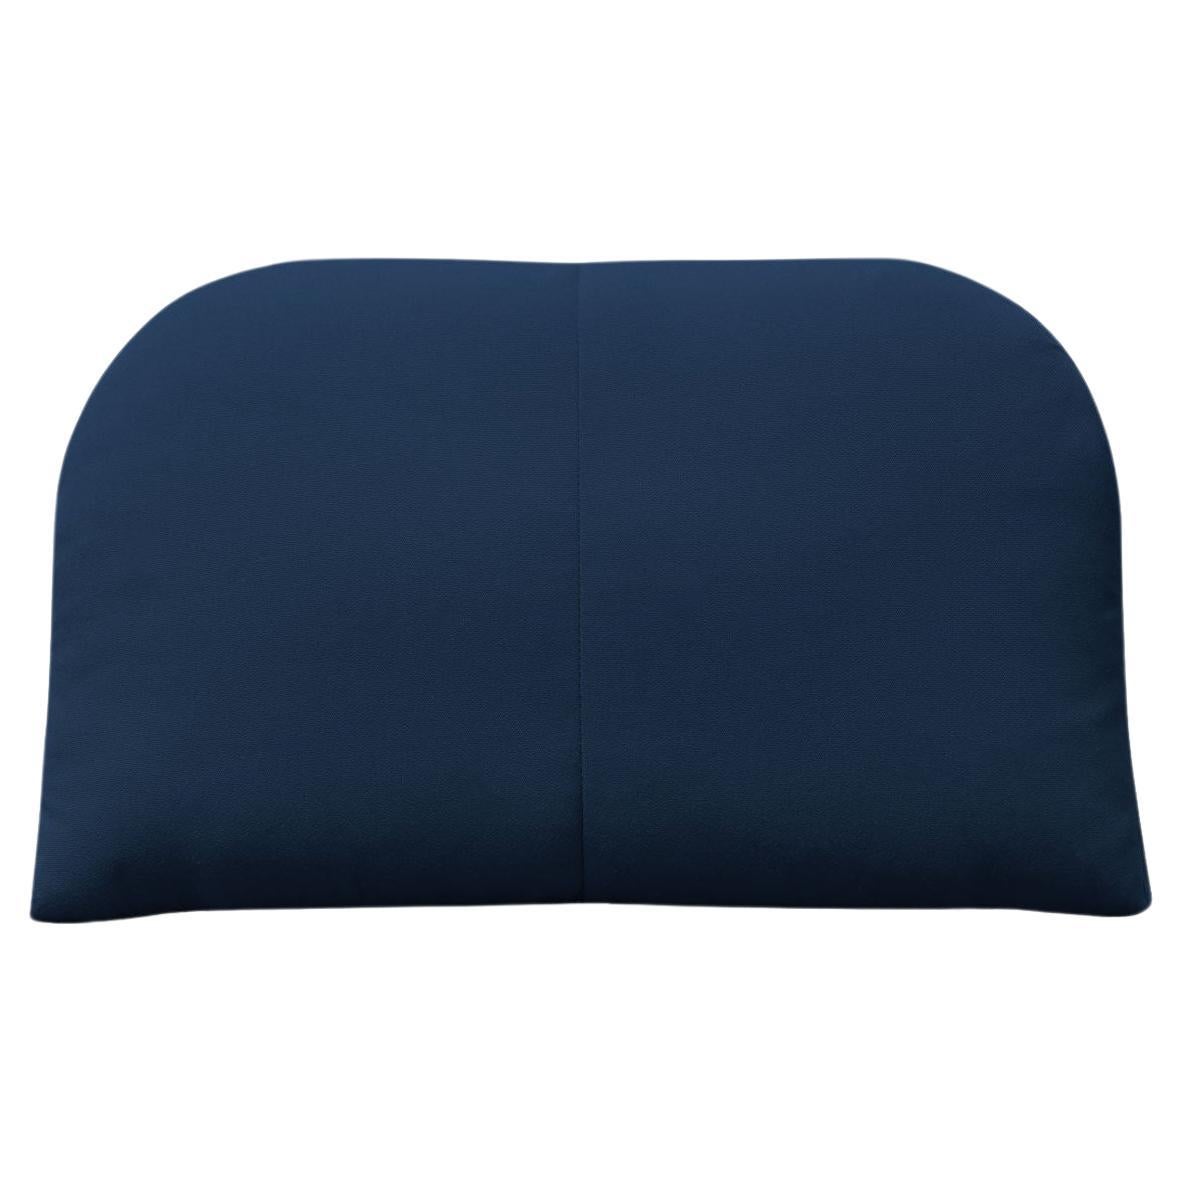 Bend Goods - Arc Throw Pillow in Navy Blue Sunbrella For Sale